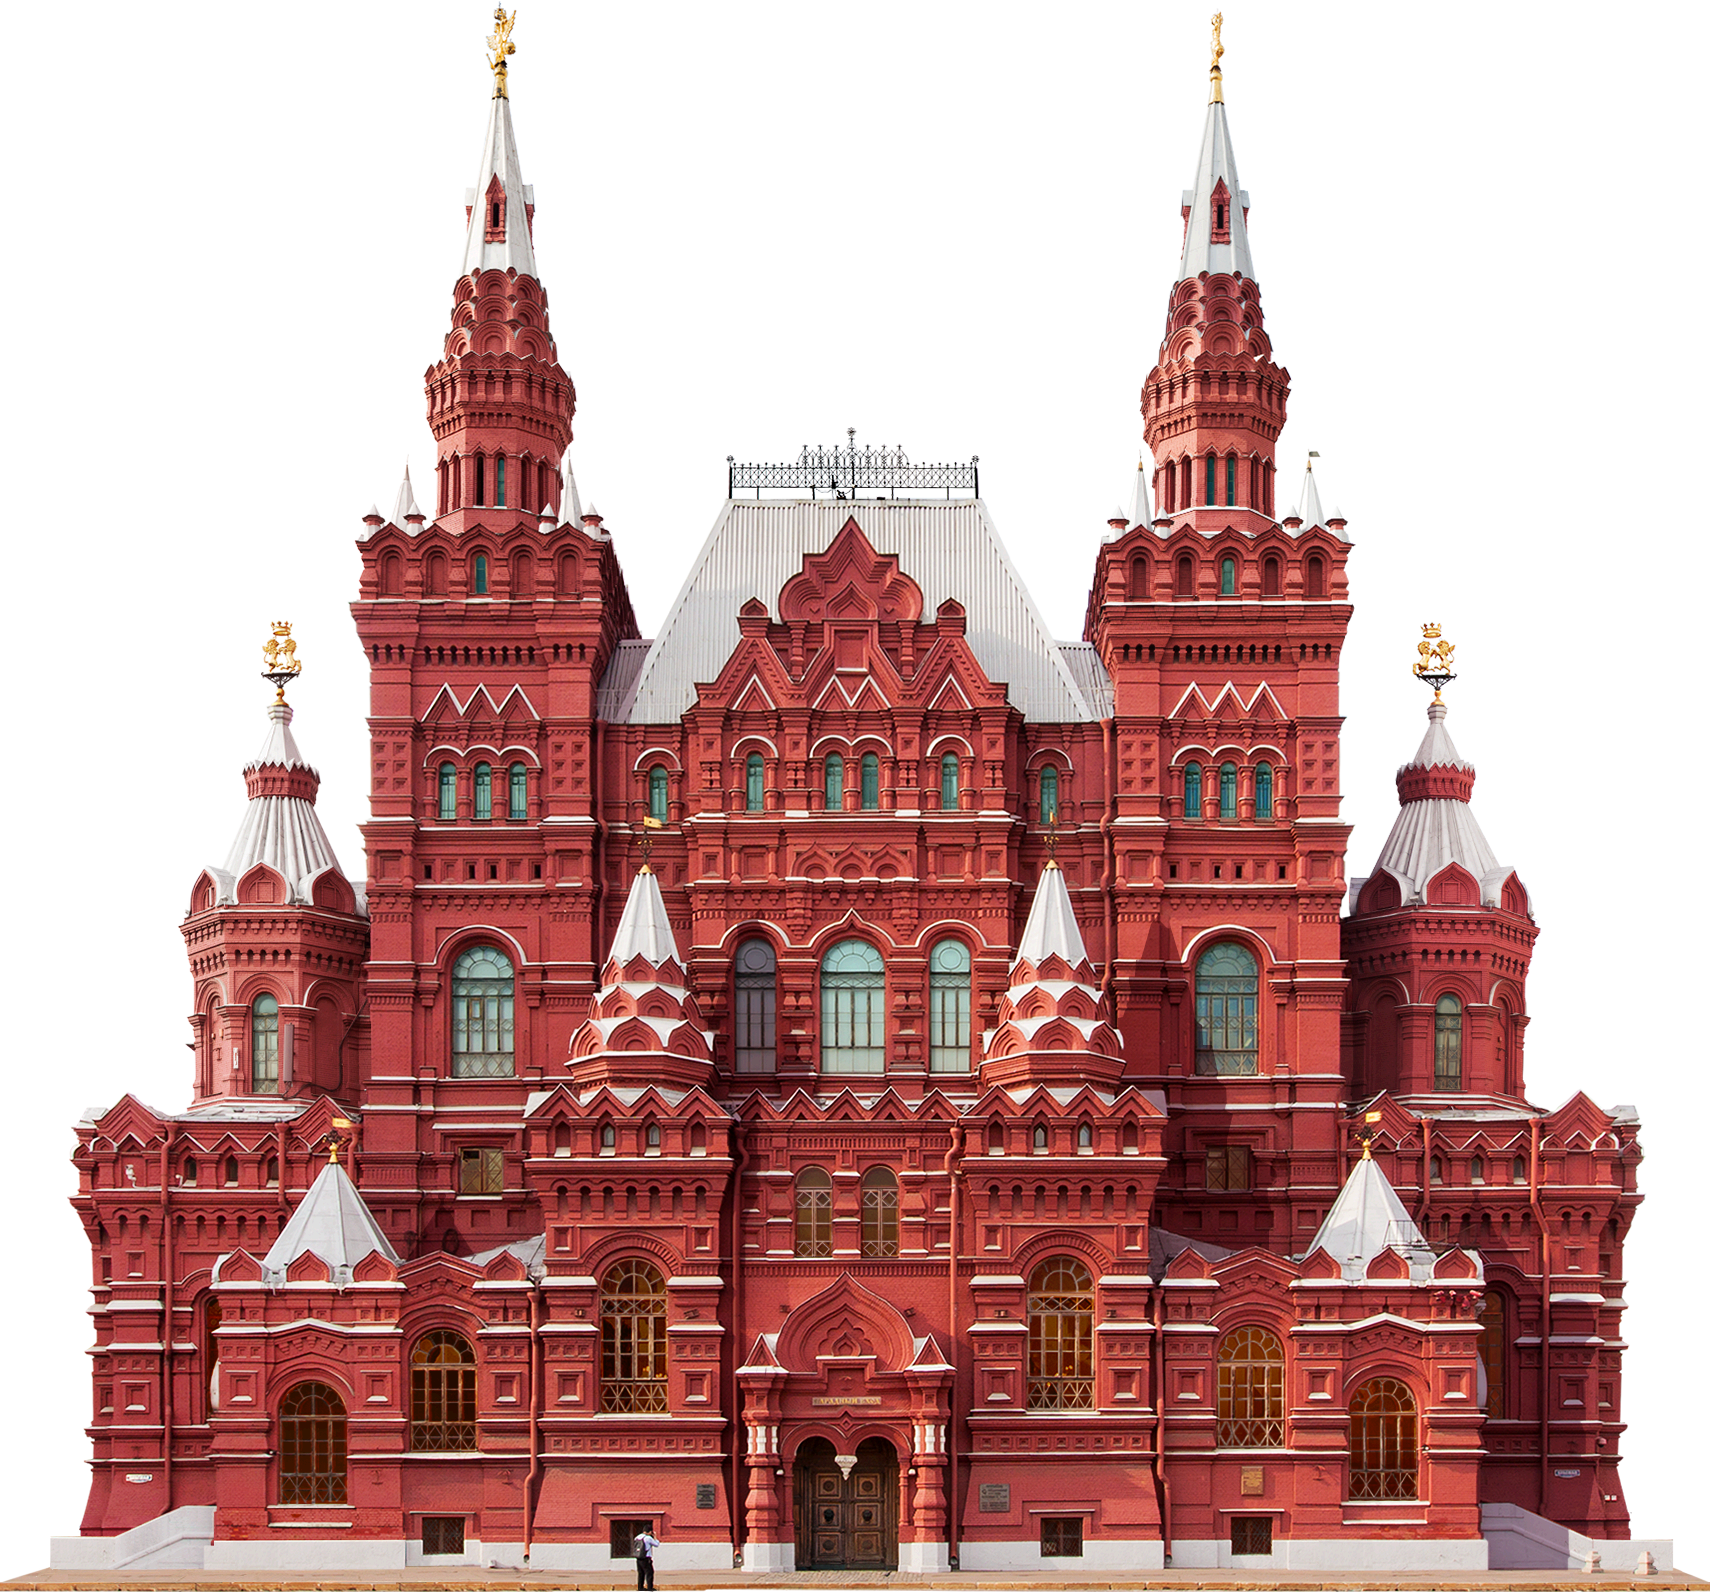 Mosca